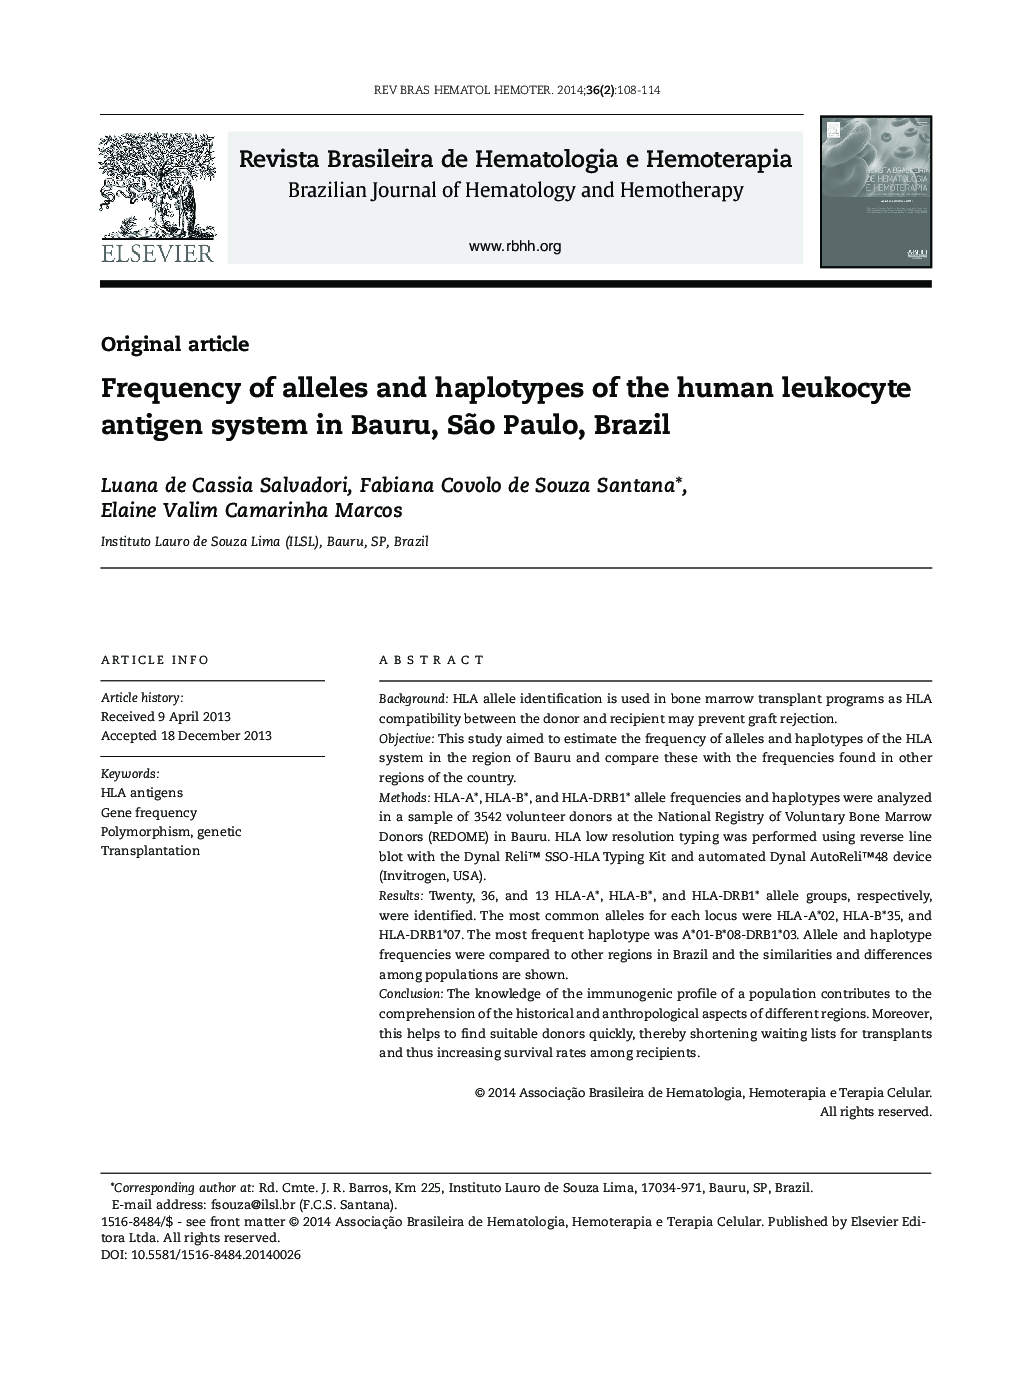 Frequency of alleles and haplotypes of the human leukocyte antigen system in Bauru São Paulo, Brazil